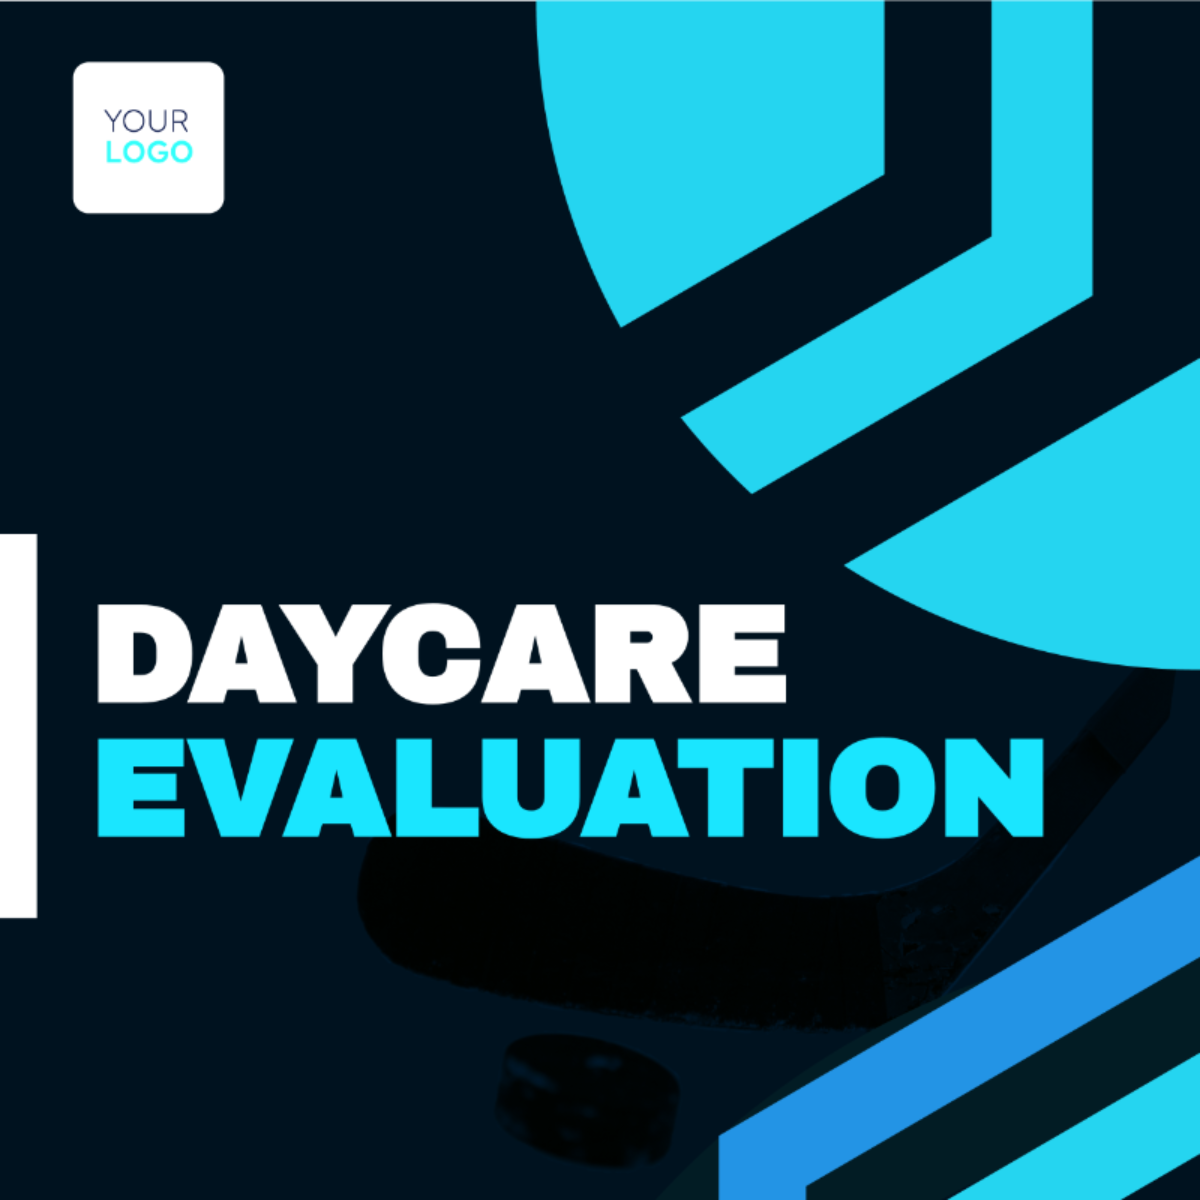 Daycare Evaluation Template